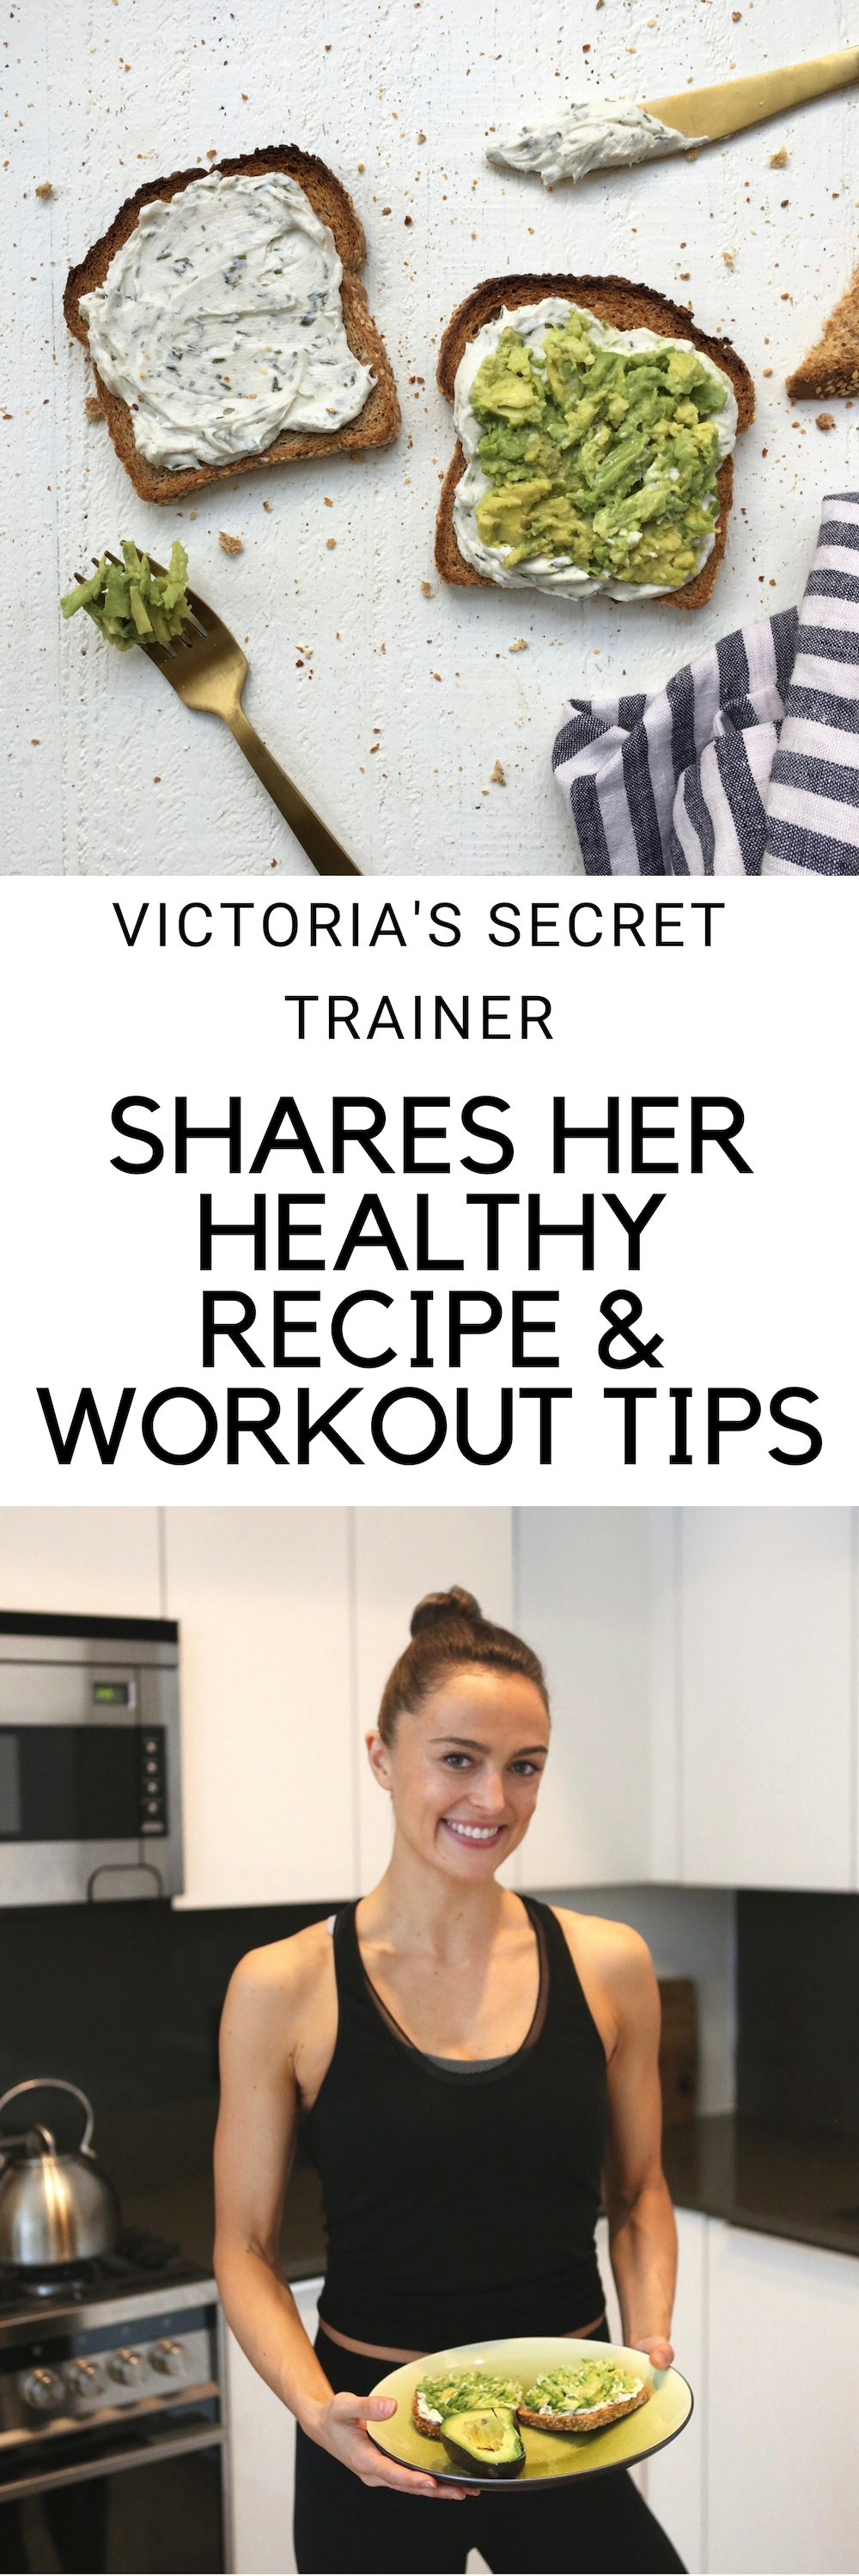 Victoria's Secret Trainer shares her secret recipe